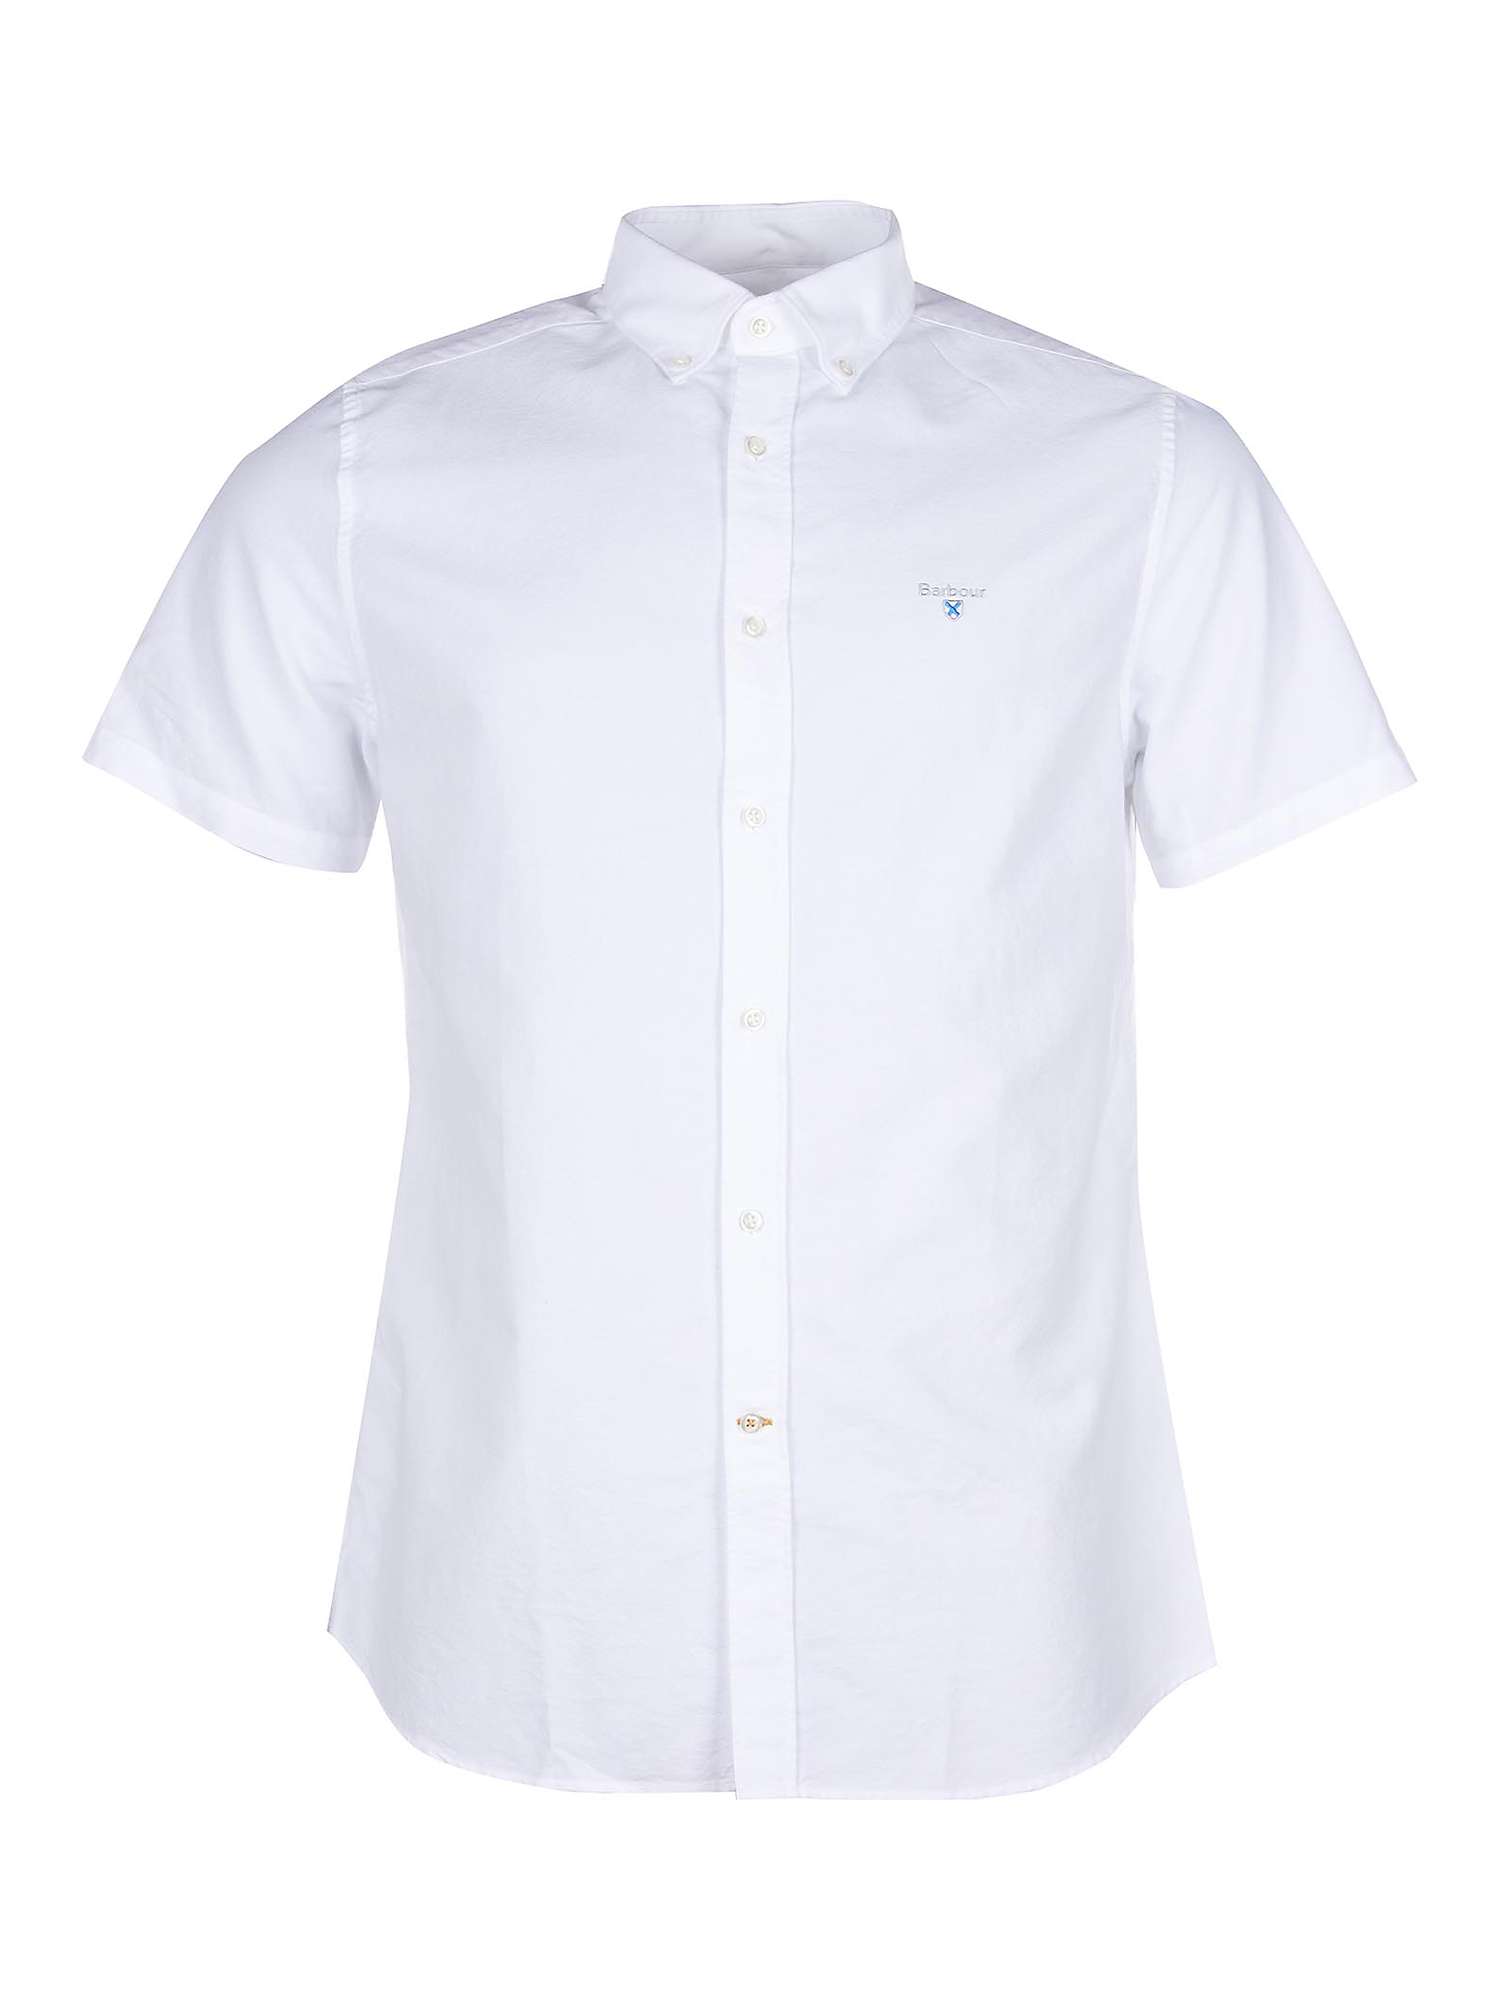 Buy Barbour Short Sleeve Oxford Shirt Online at johnlewis.com